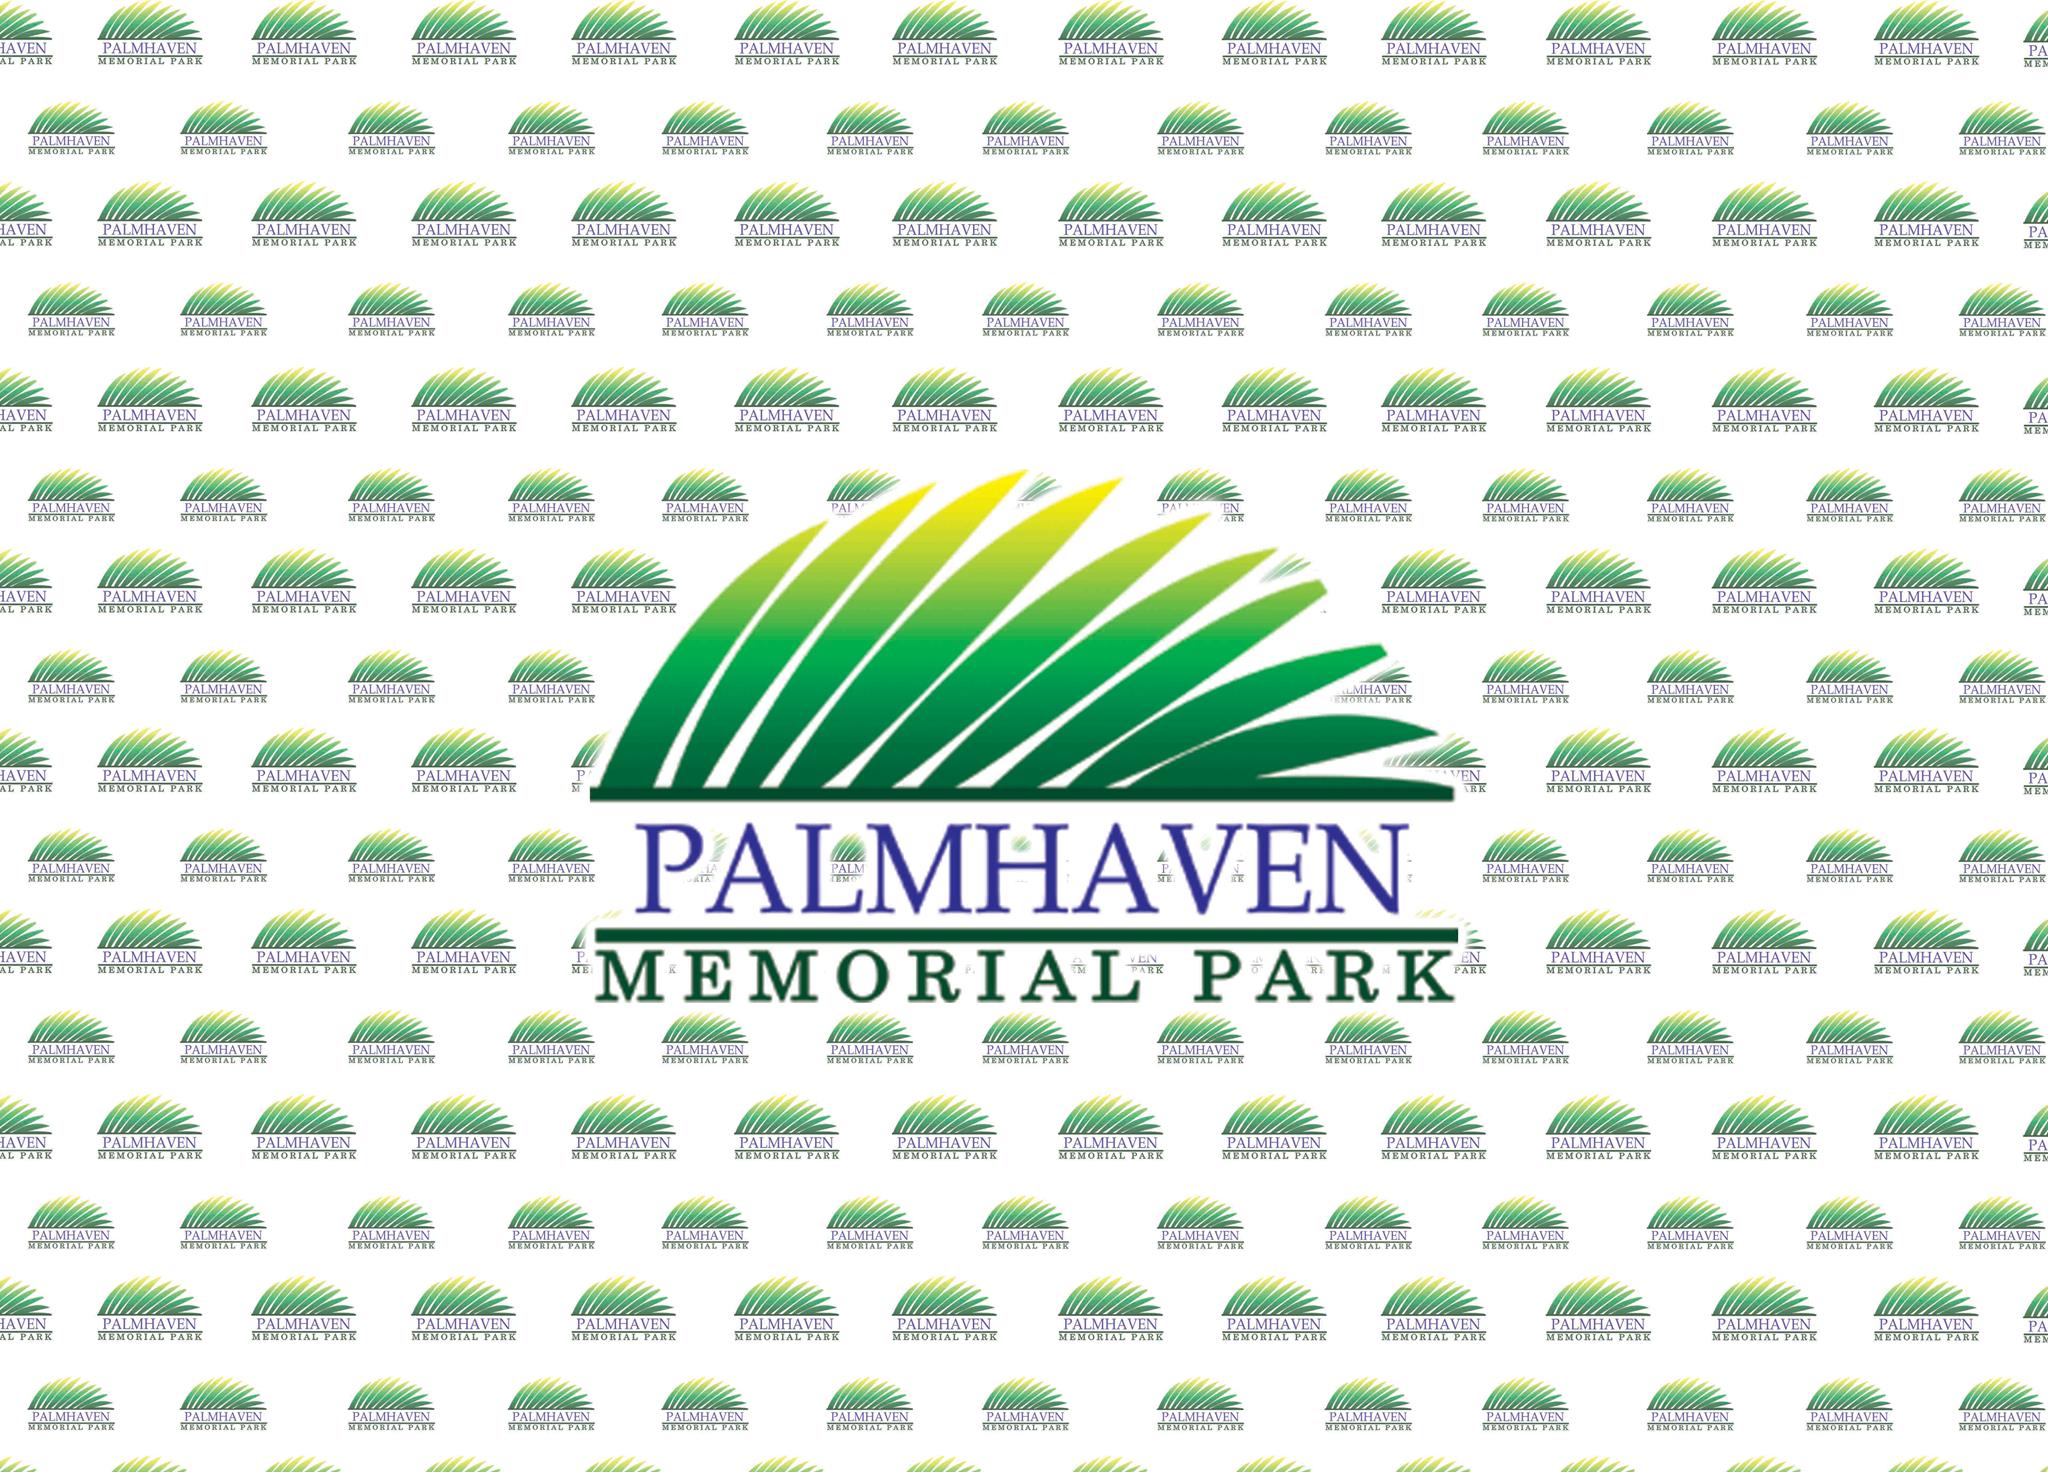 Palmhaven Memorial Park